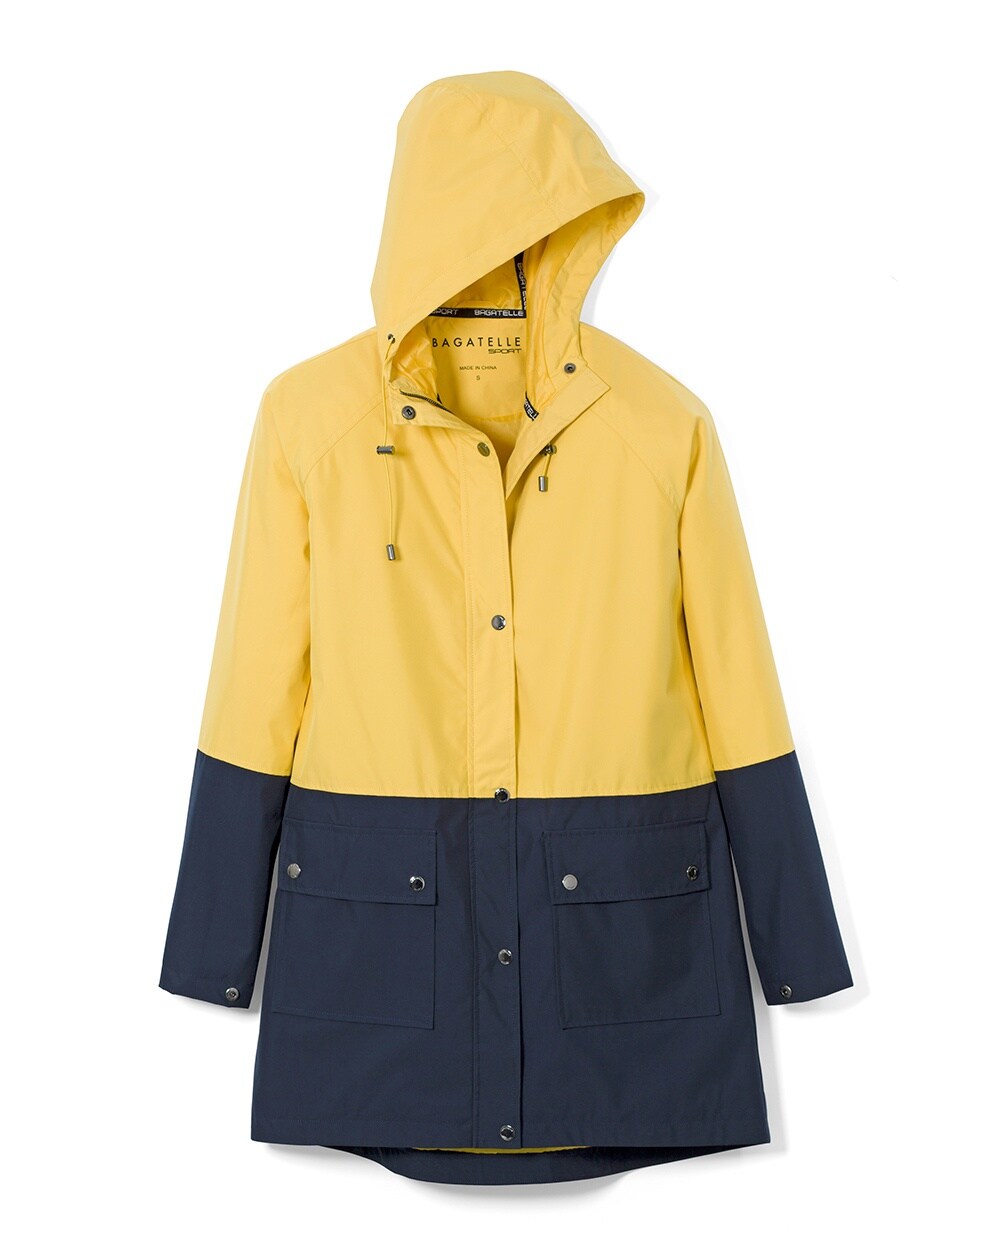 Bagatelle Colorblock Rain Jacket